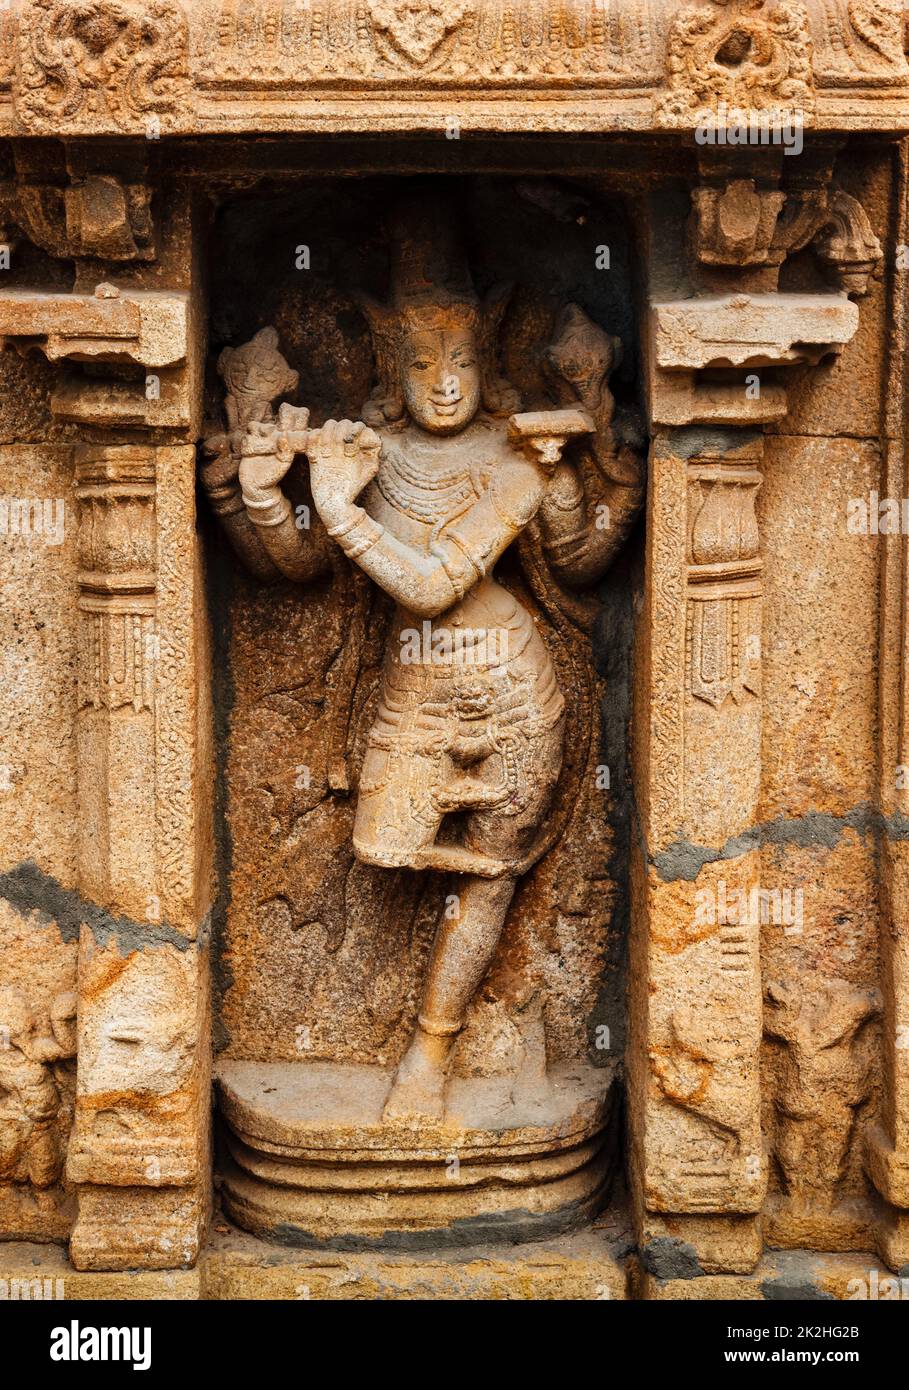 Krishna bas relief dans le temple hindou. Temple Sri Ranganathaswamy. Tiruchirapalli, Tamil Nadu, Inde Banque D'Images